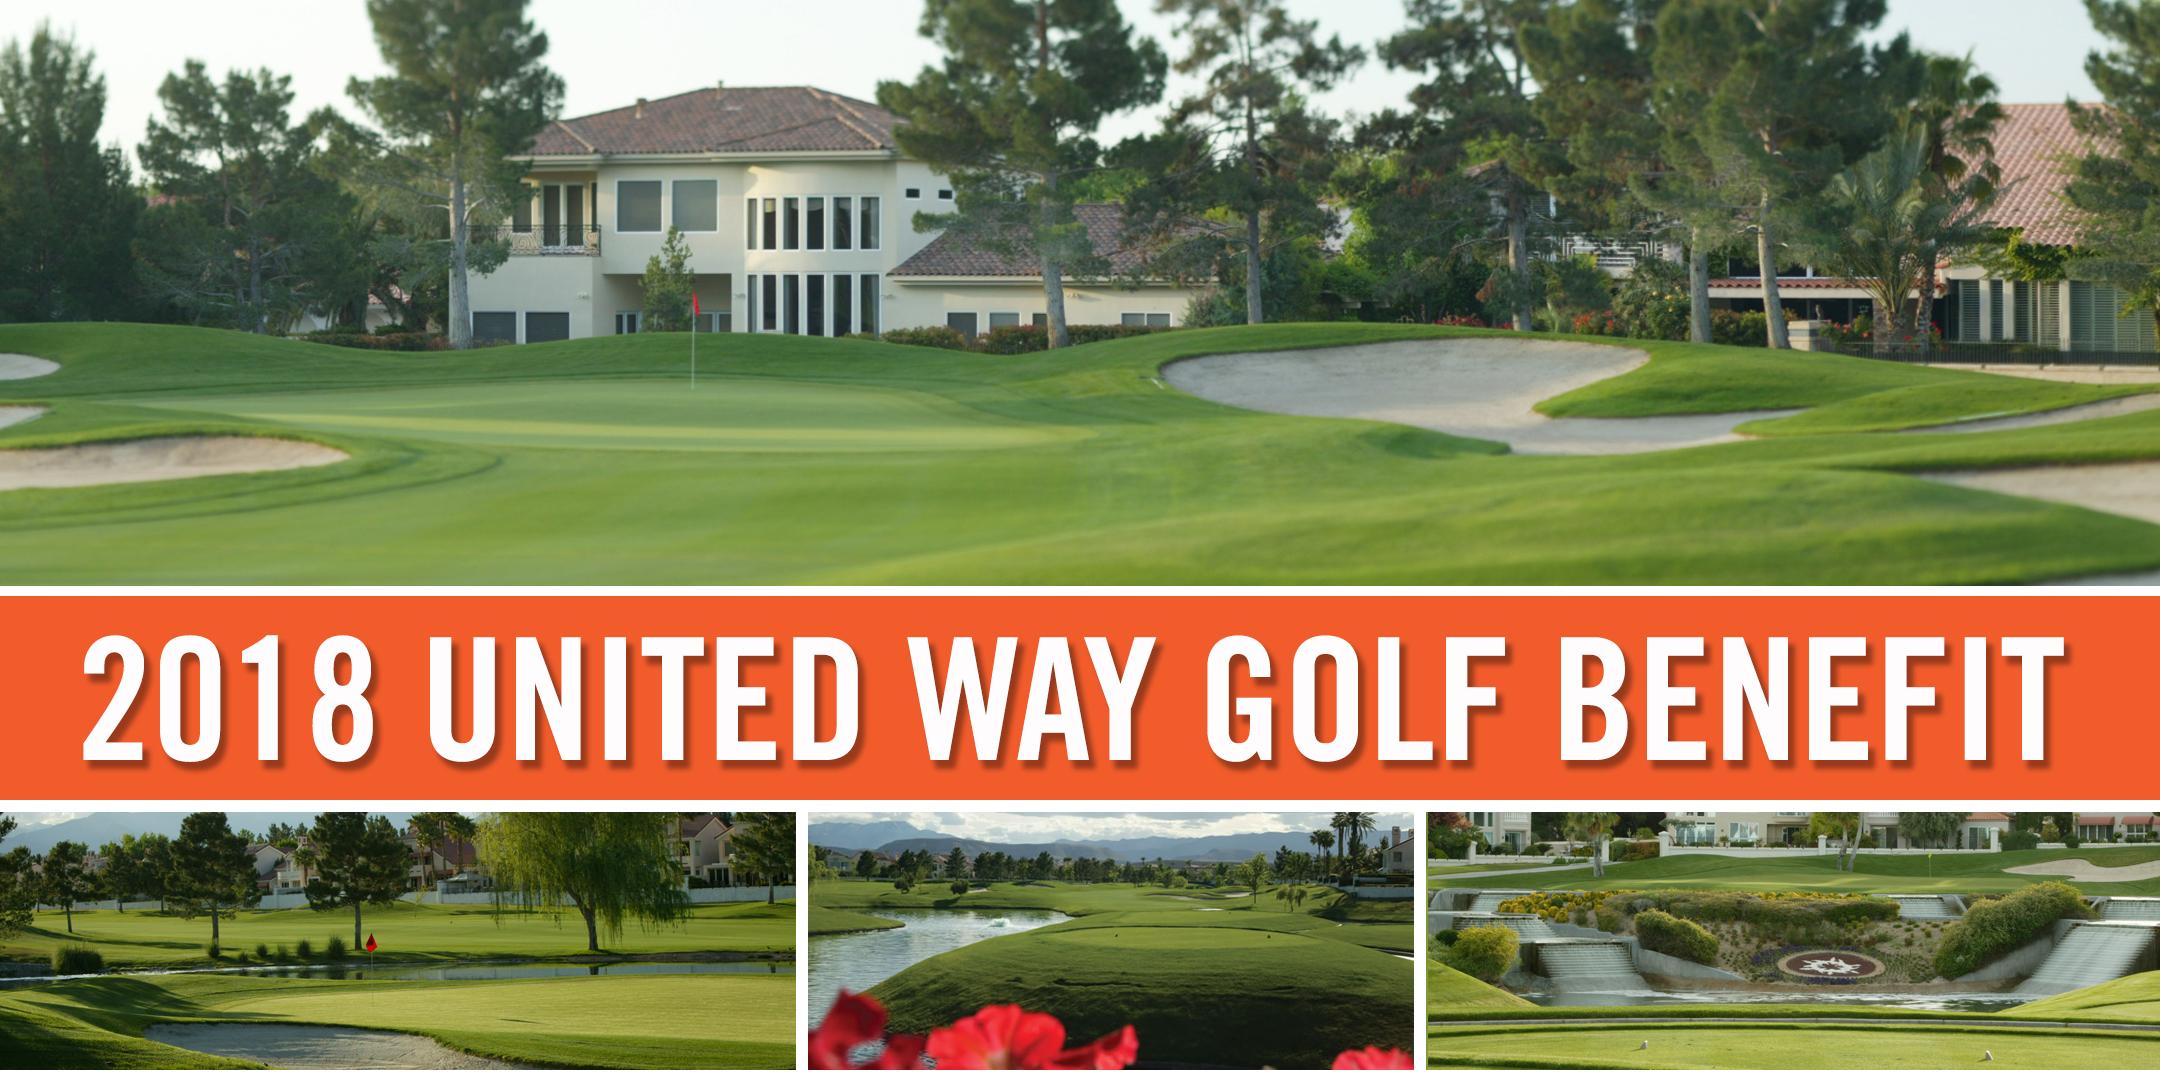 7th Annual United Way Golf Benefit